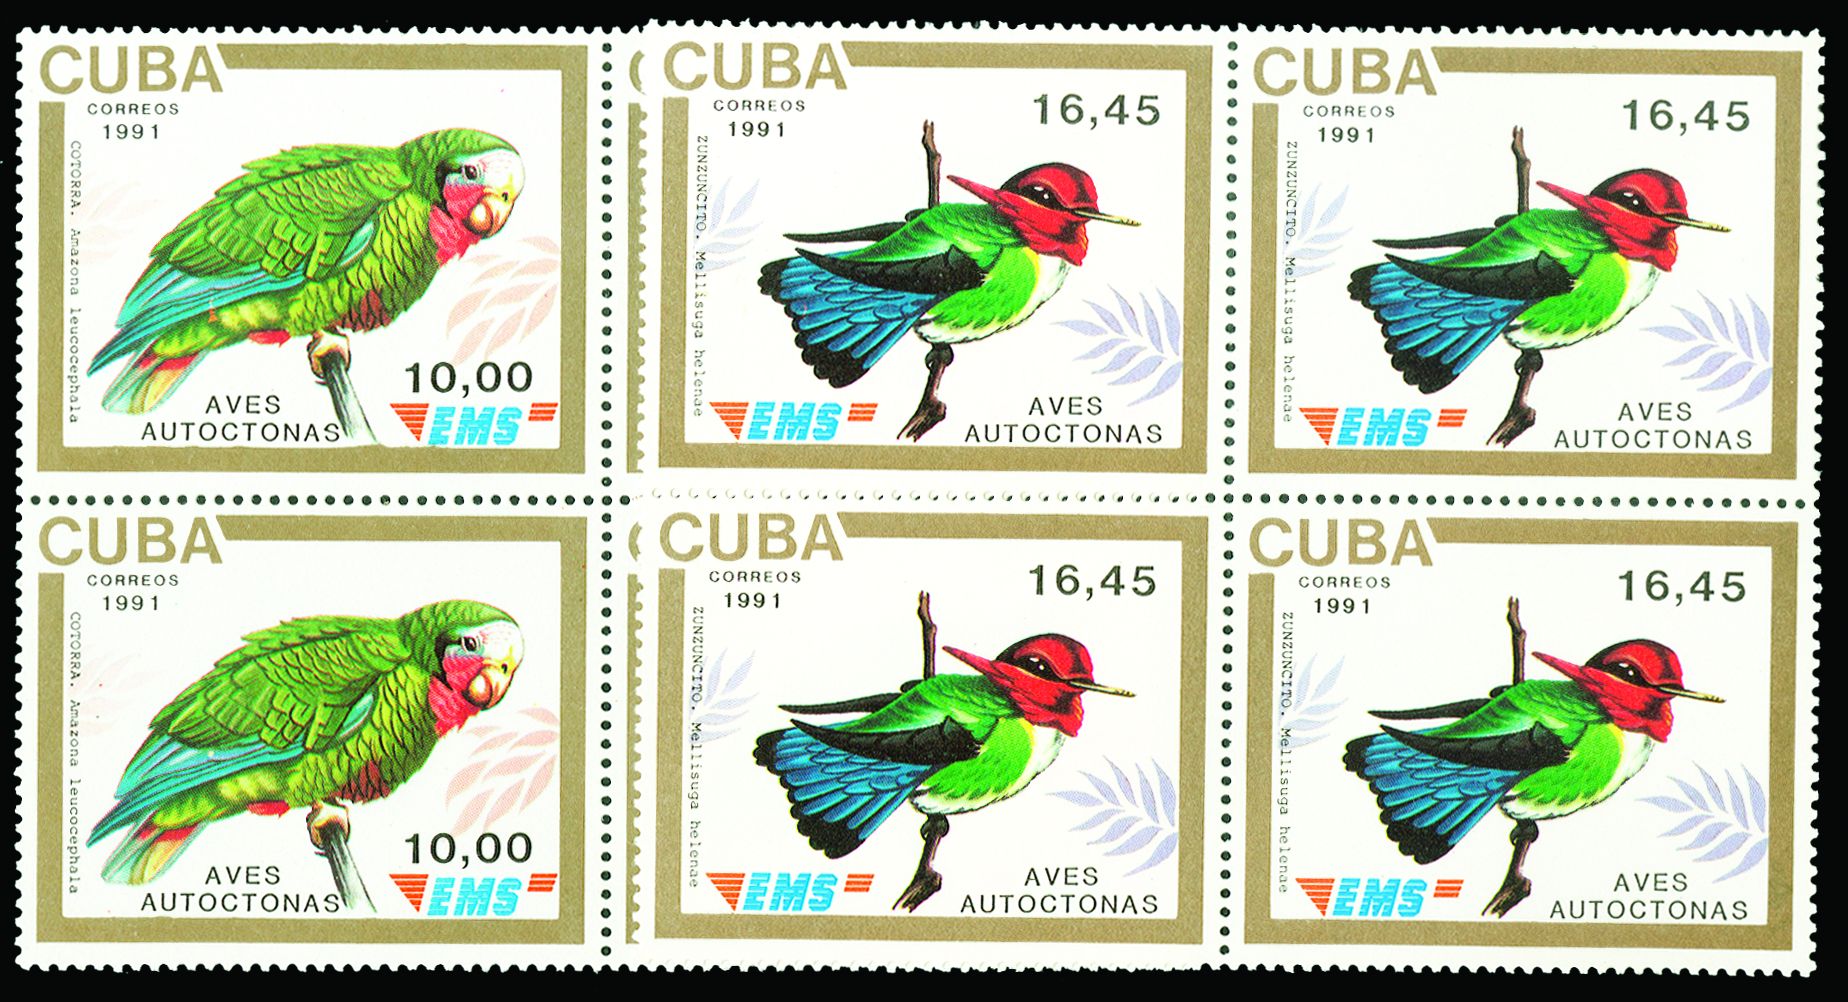 CUBA Express Mail: 1991 Birds 45c to 16p45 (SG E3638/44) blocks of four, fine u/m, uncommon, cat £